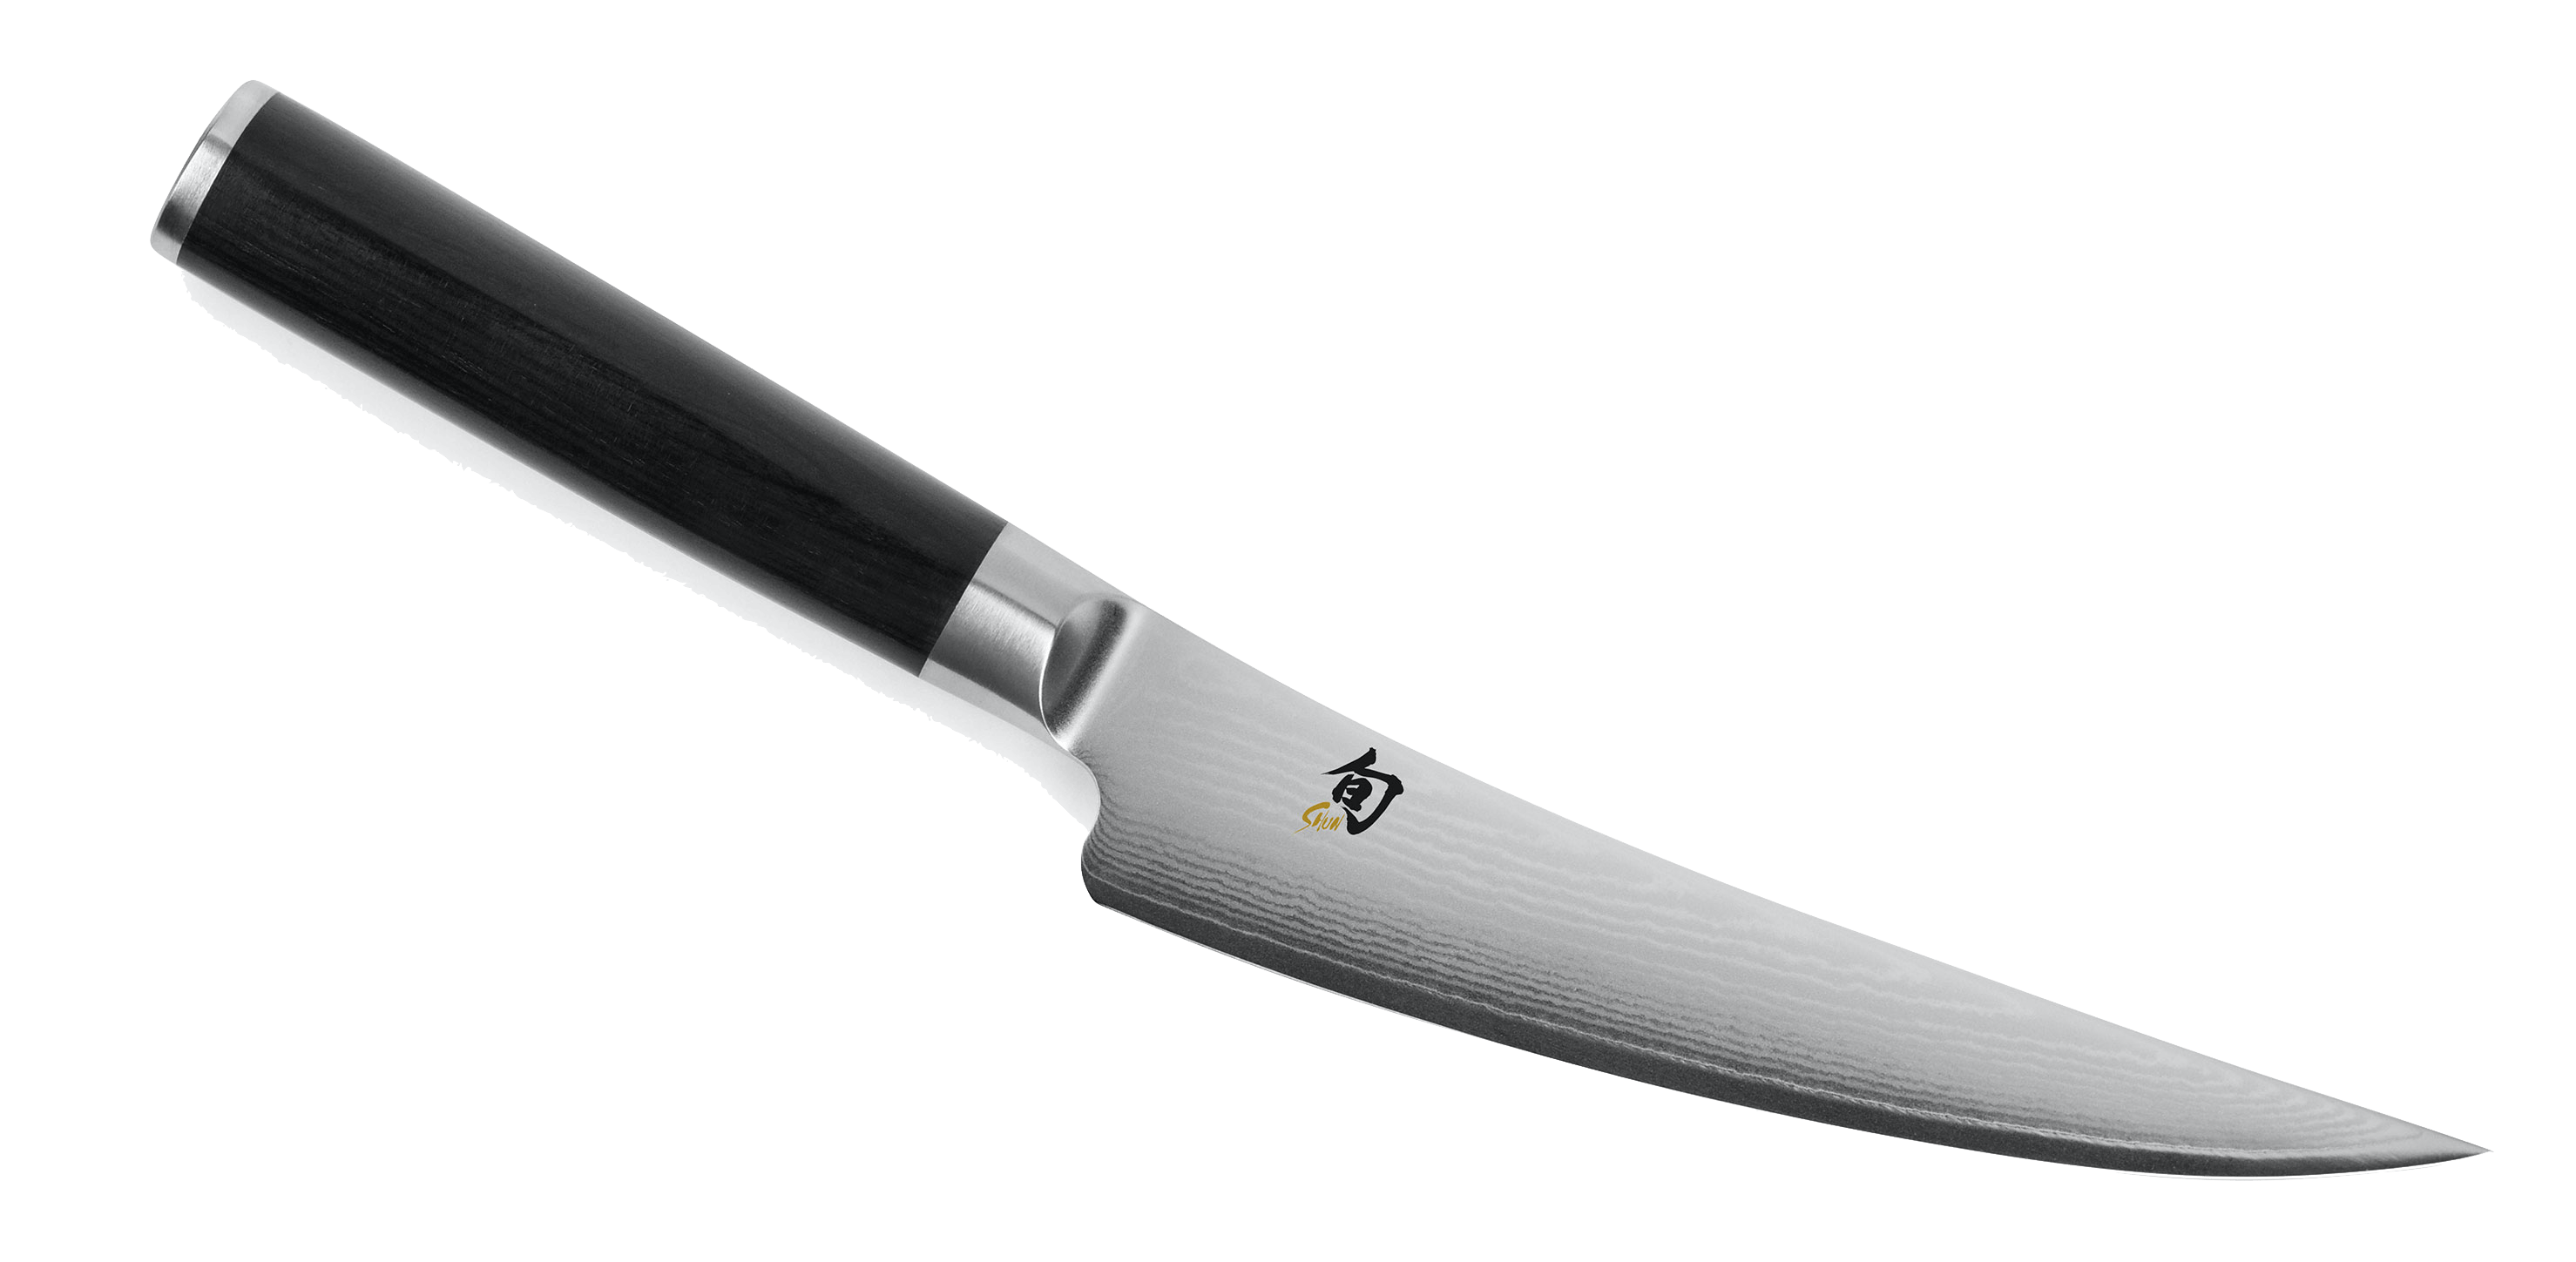 The Shun Classic Boning & Filet 6” Knife. 